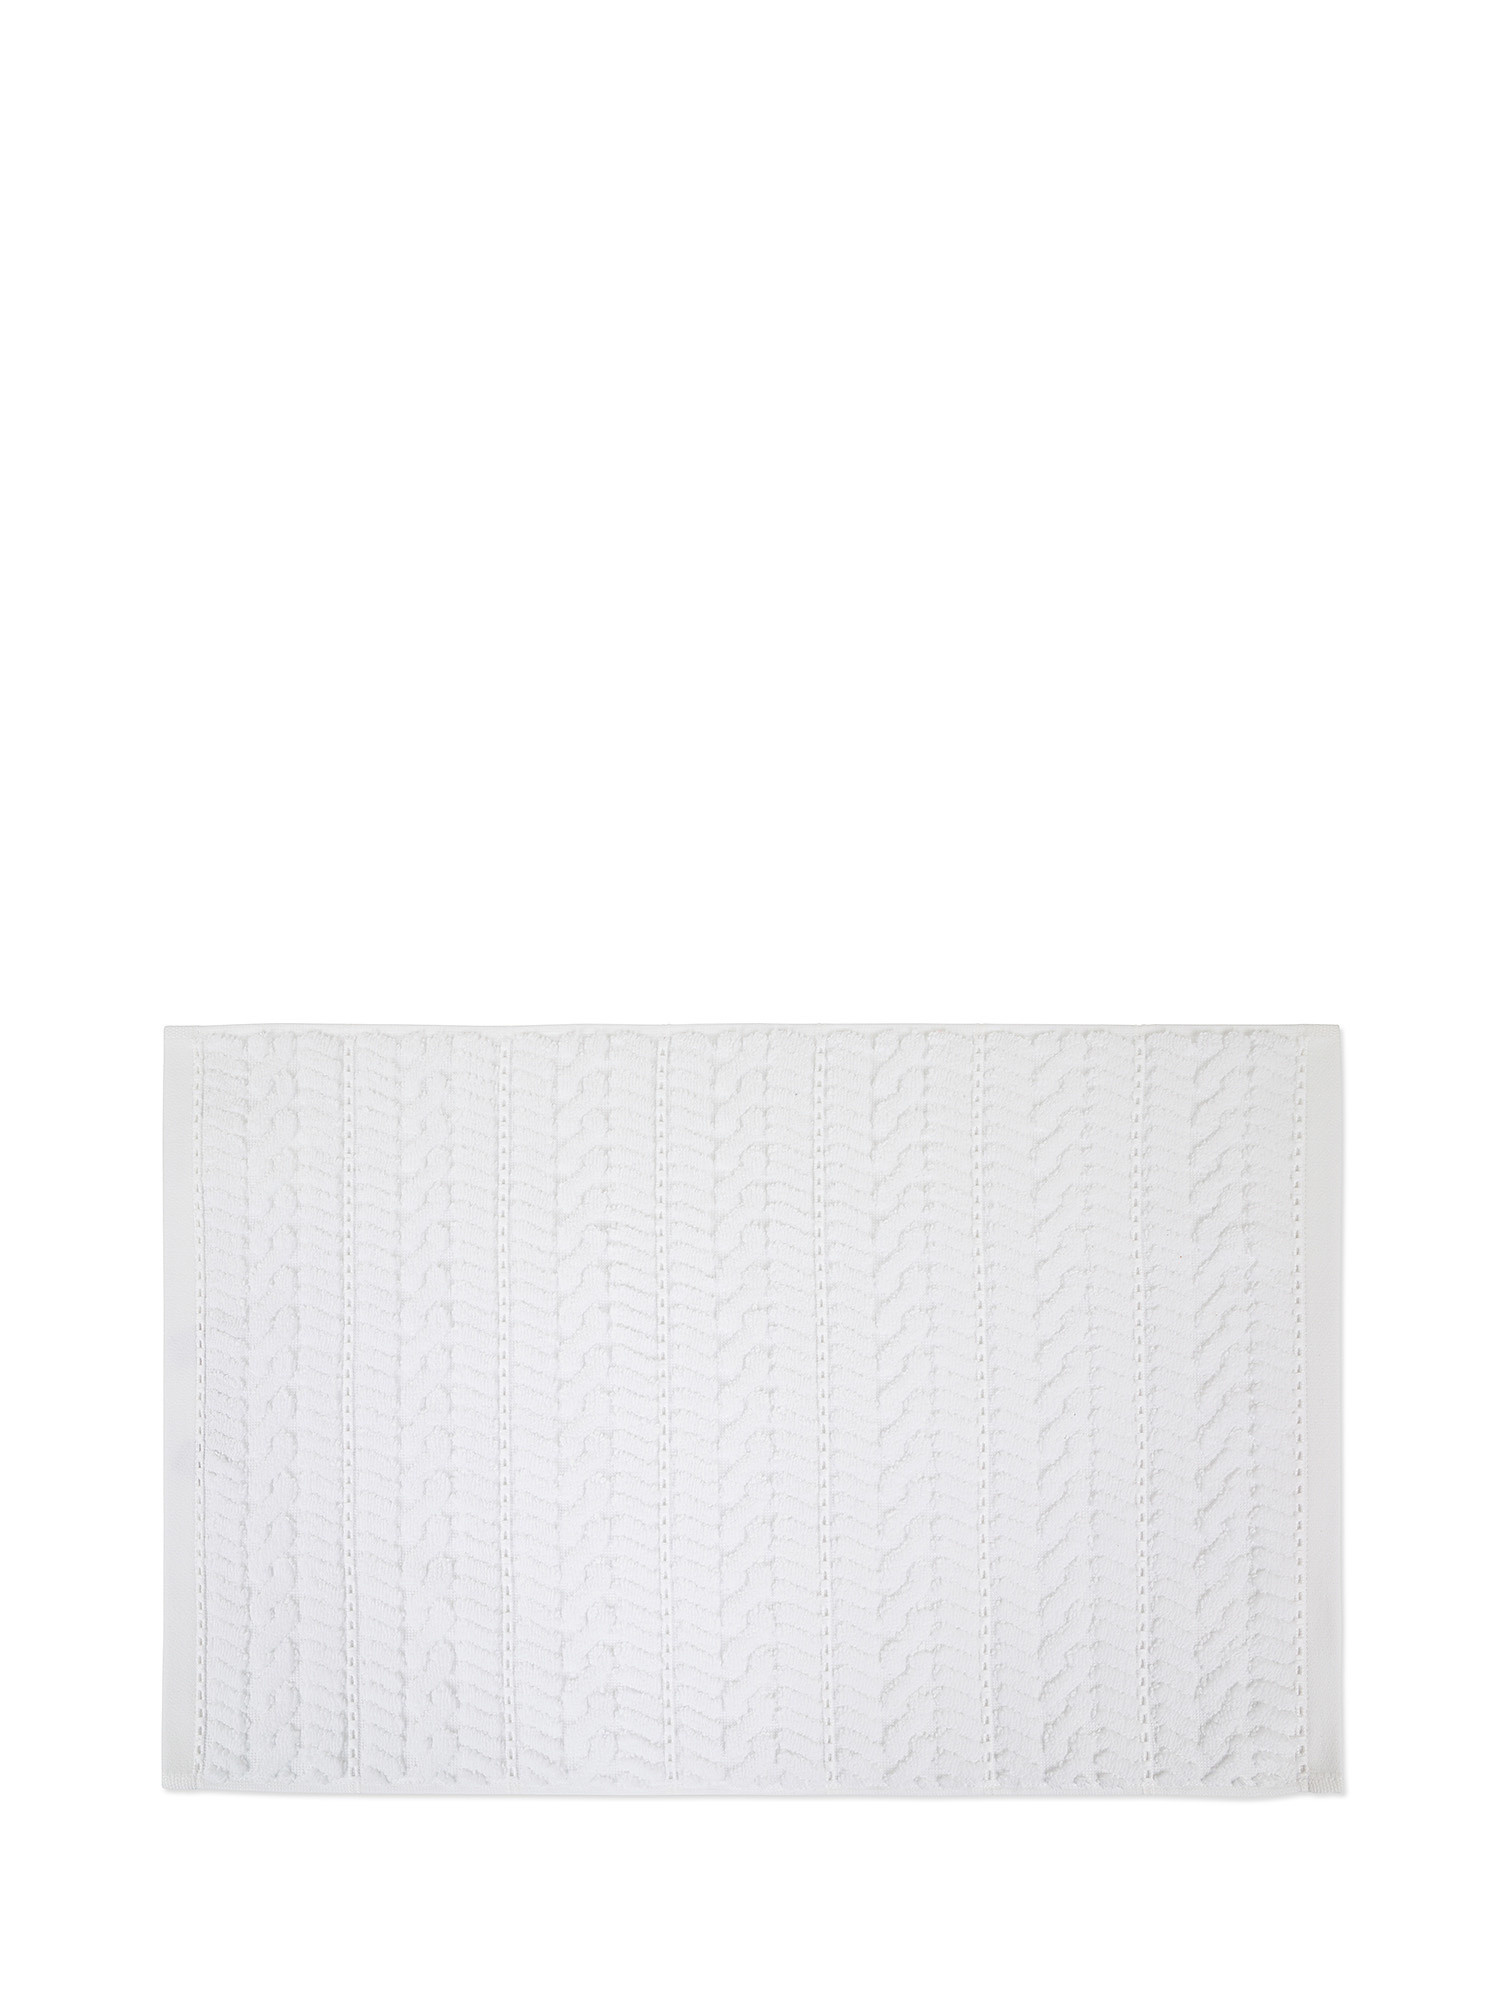 Thermae zero twist cotton towel, White, large image number 1